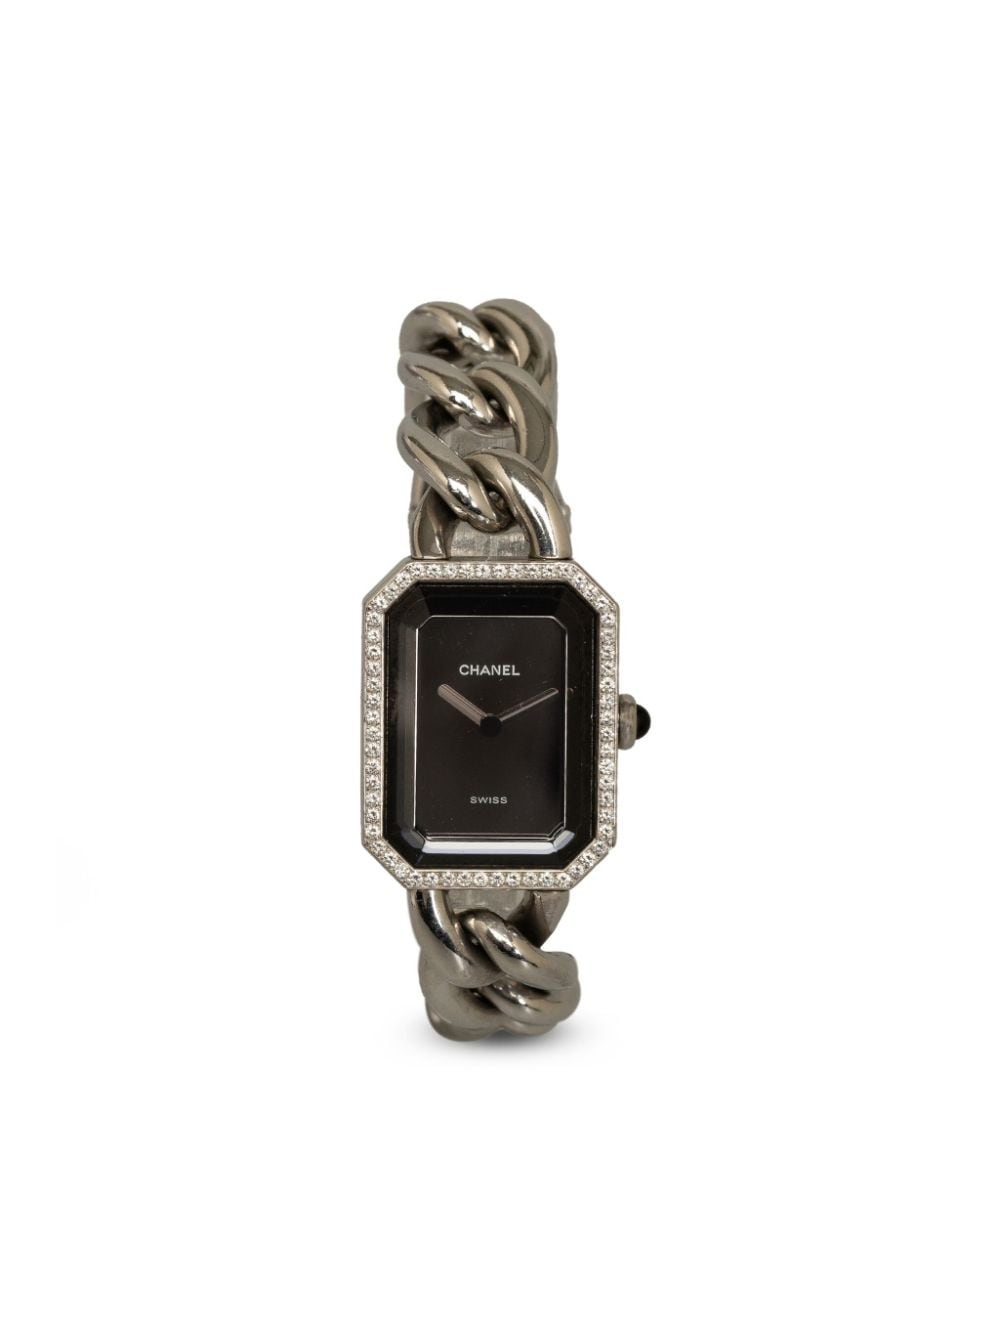 1987 Chanel Stainless Steel Quartz Diamond Bezel Premiere Chain Watch